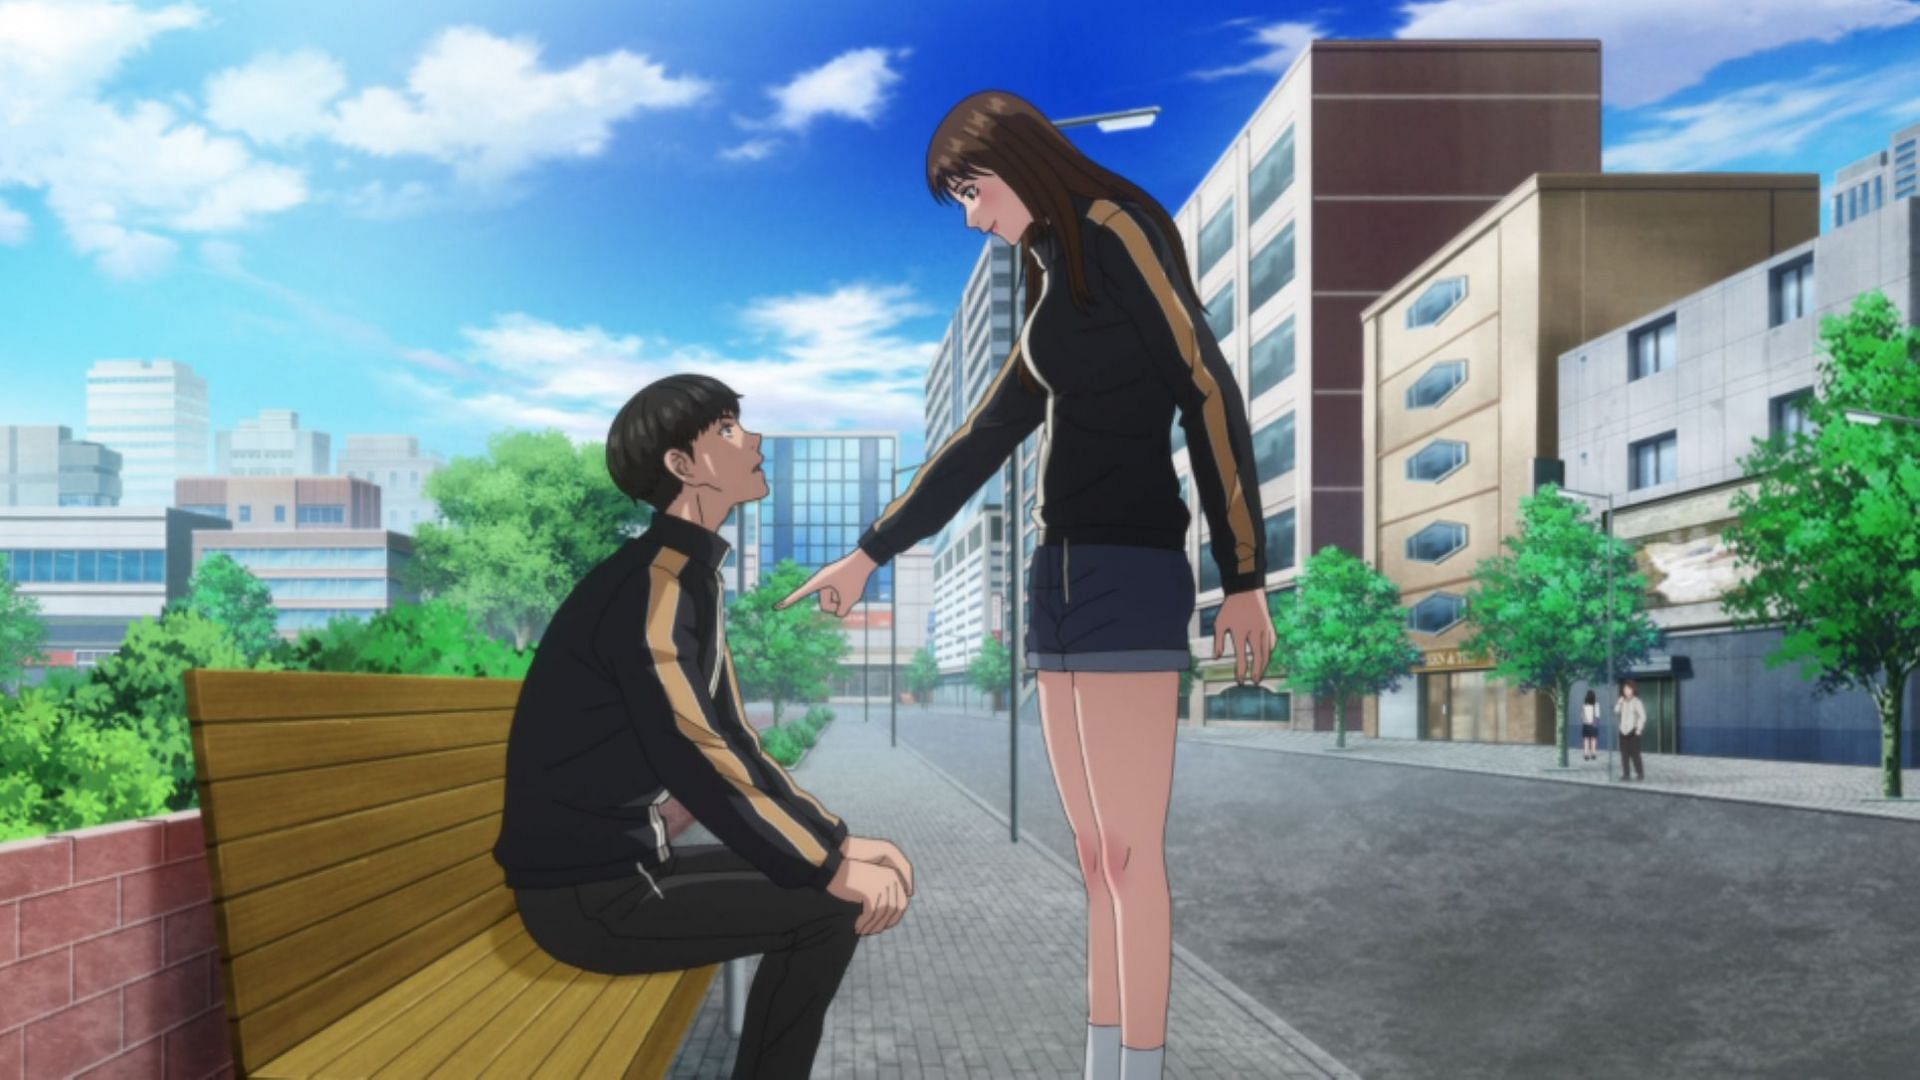 Hobin and Bomi dating in Viral Hit episode 3 (Image via Okuruto Noboru)